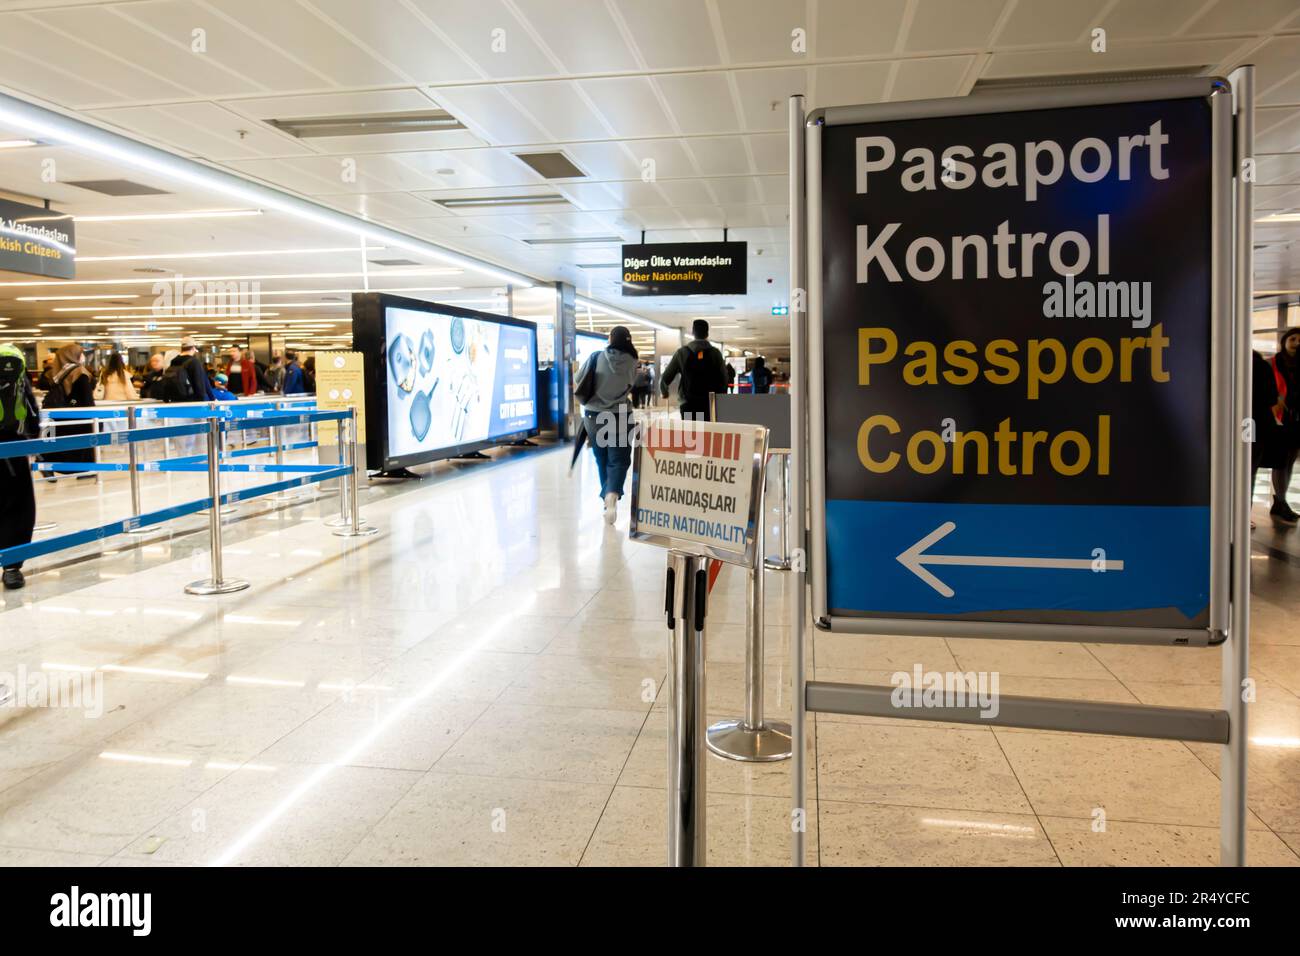 Passport control sign and direction signs, arrivals at Sabiha Gokcen International Airport, Istanbul, Turkey Stock Photo